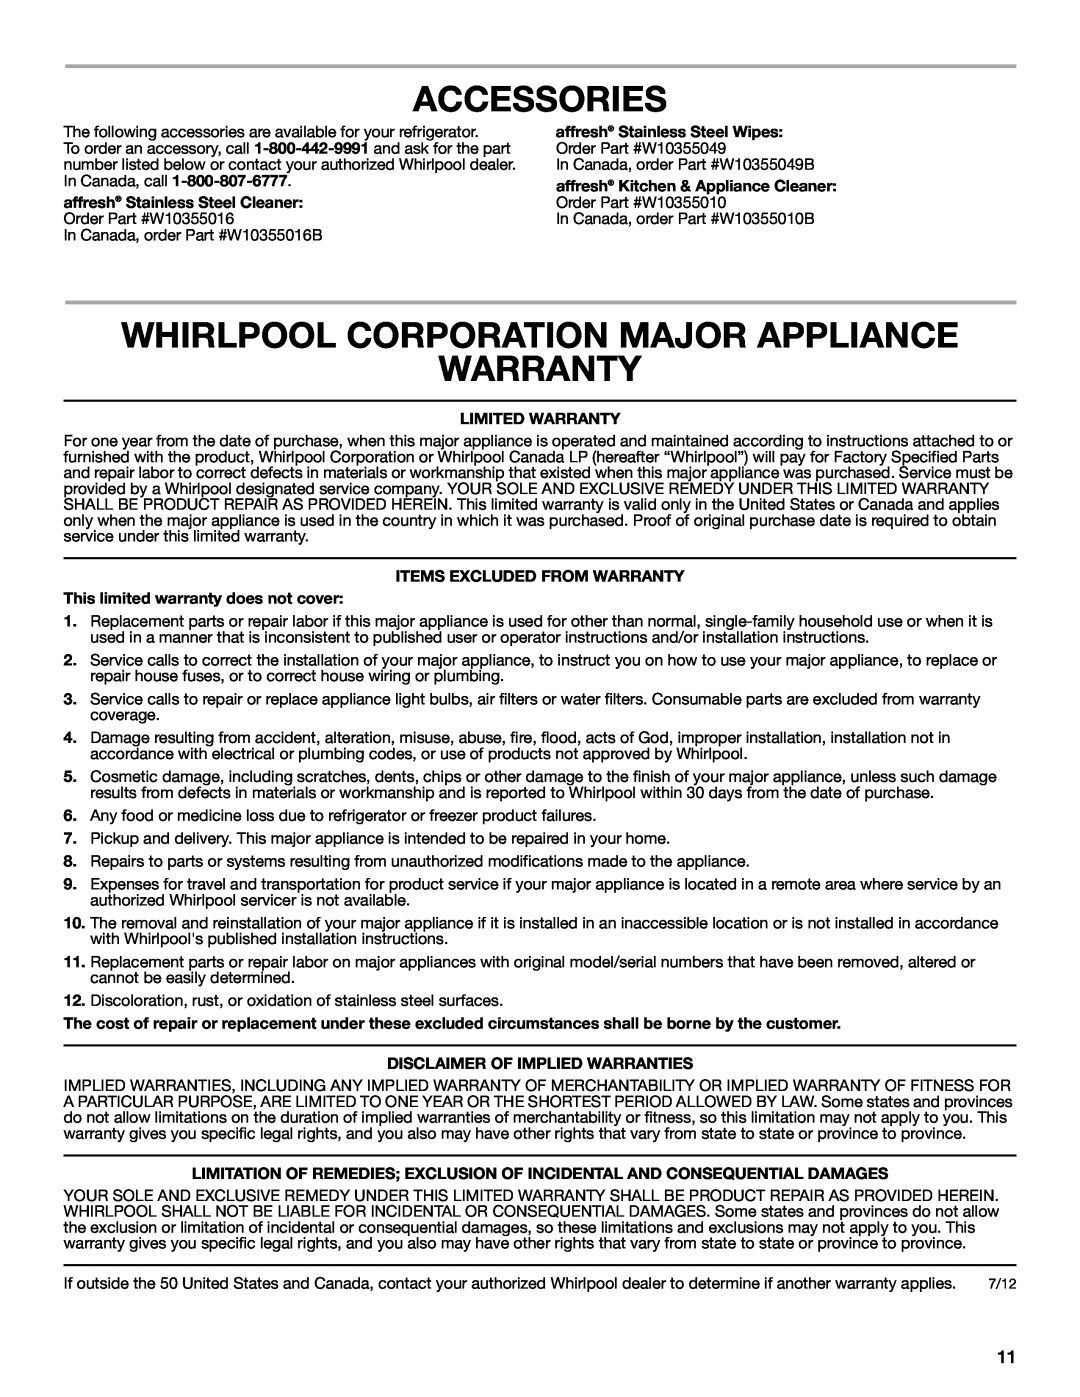 Whirlpool WRS325FNAM Accessories, Whirlpool Corporation Major Appliance Warranty, affresh Stainless Steel Wipes 